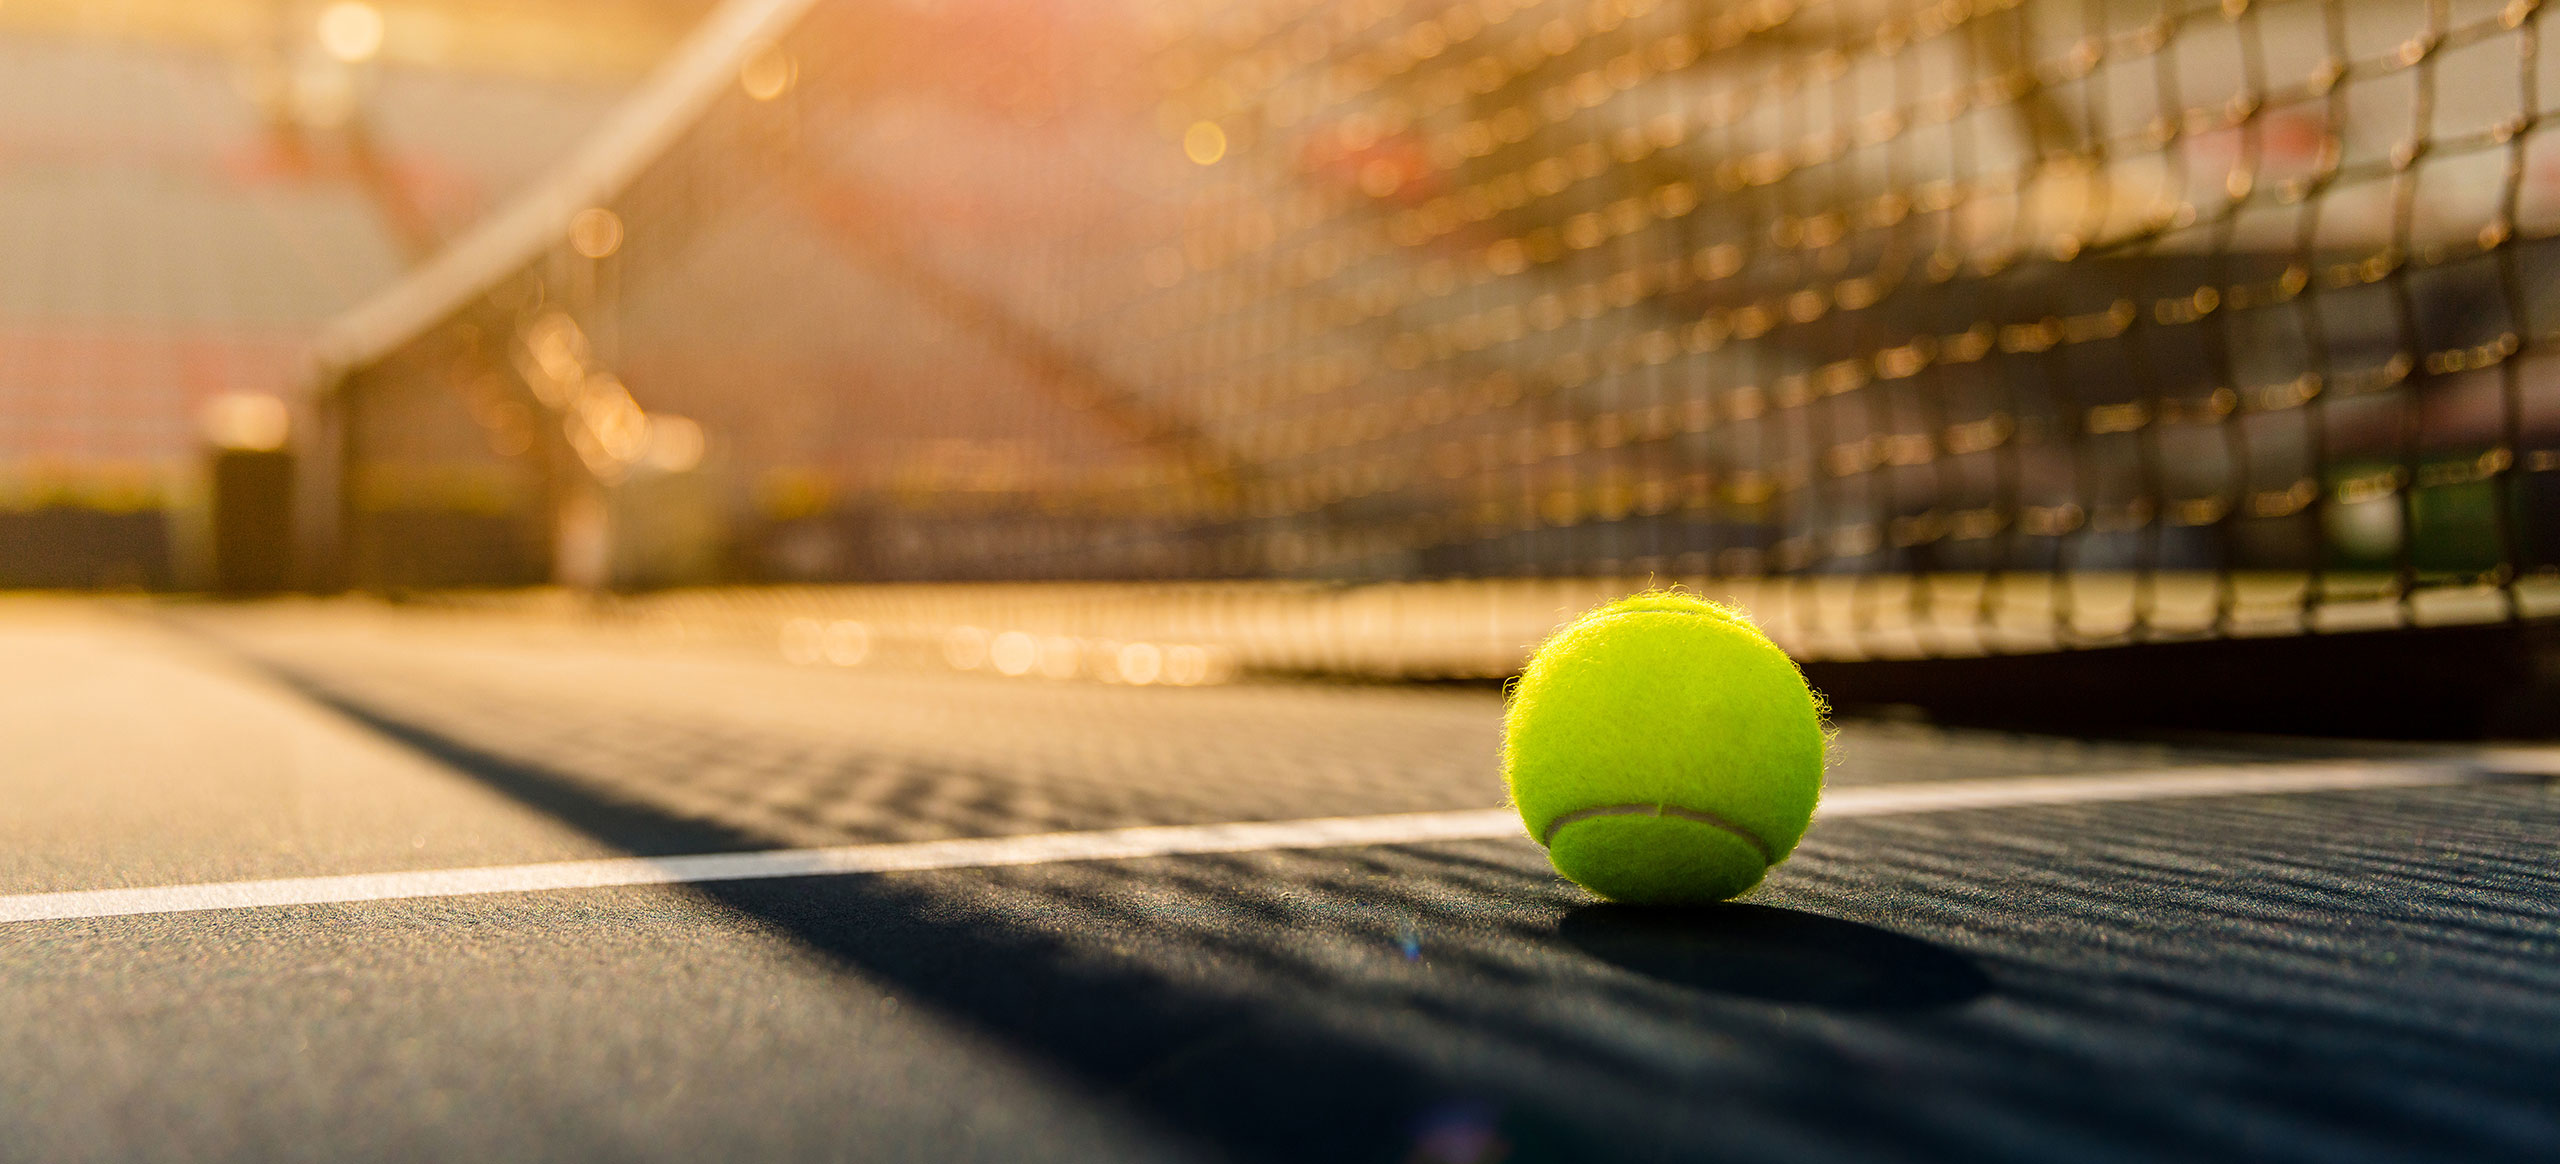 Tennis ball on court next to net